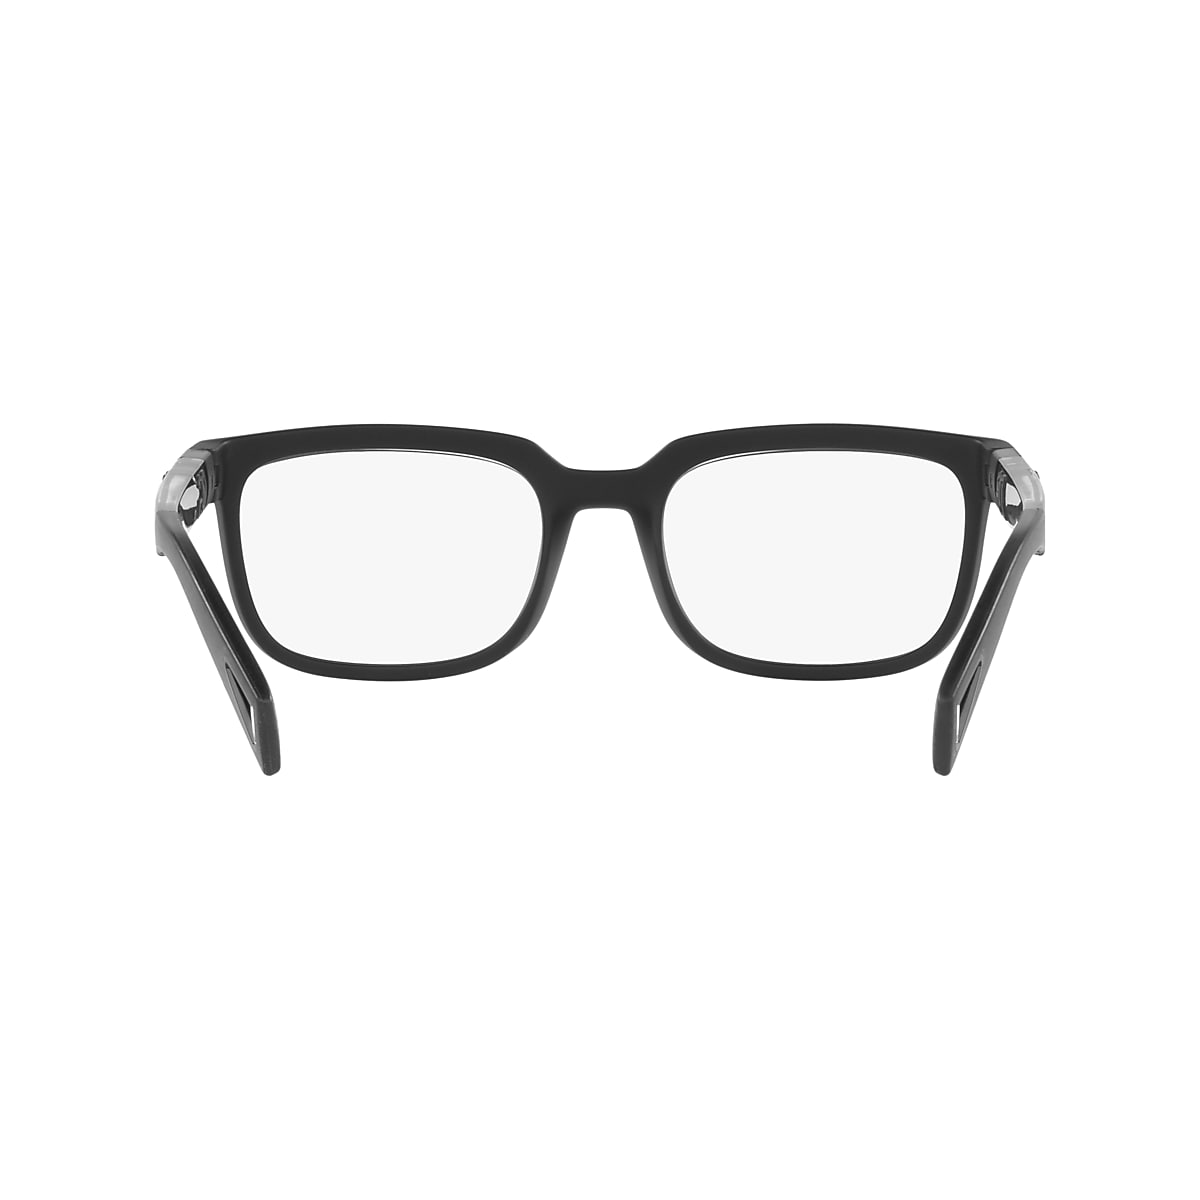 Dolce & Gabbana Black Rubber Eyeglasses | Glasses.com® | Free Shipping